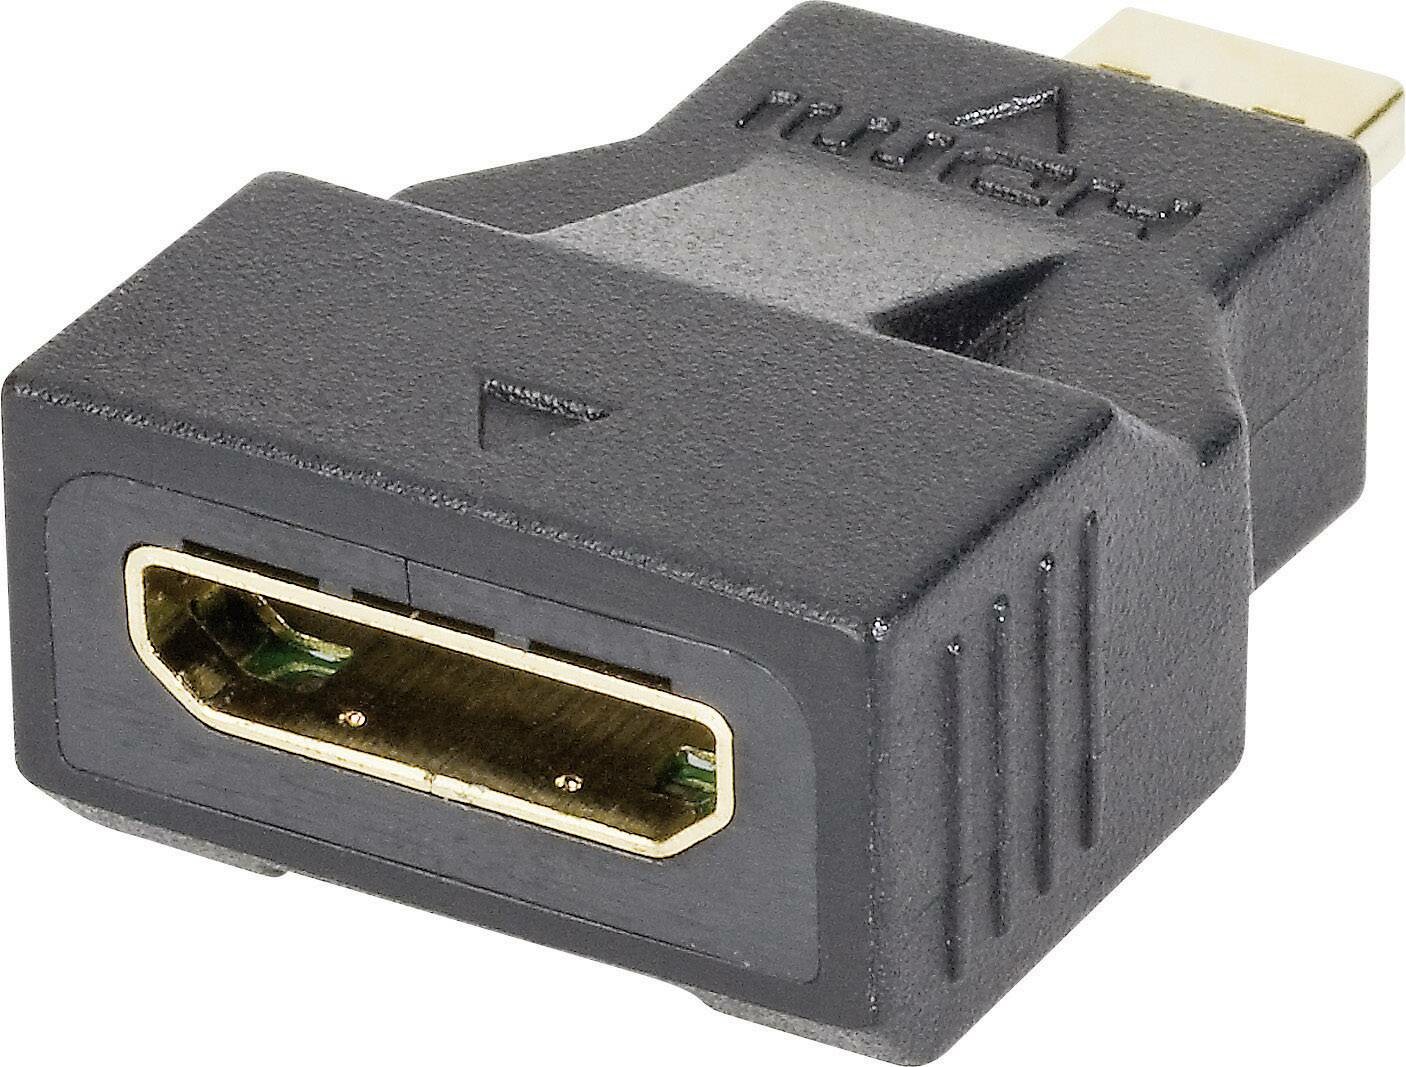 Adaptateur HDMI Femelle - HDMI Mini-C mâle + Micro-D mâle - Delock